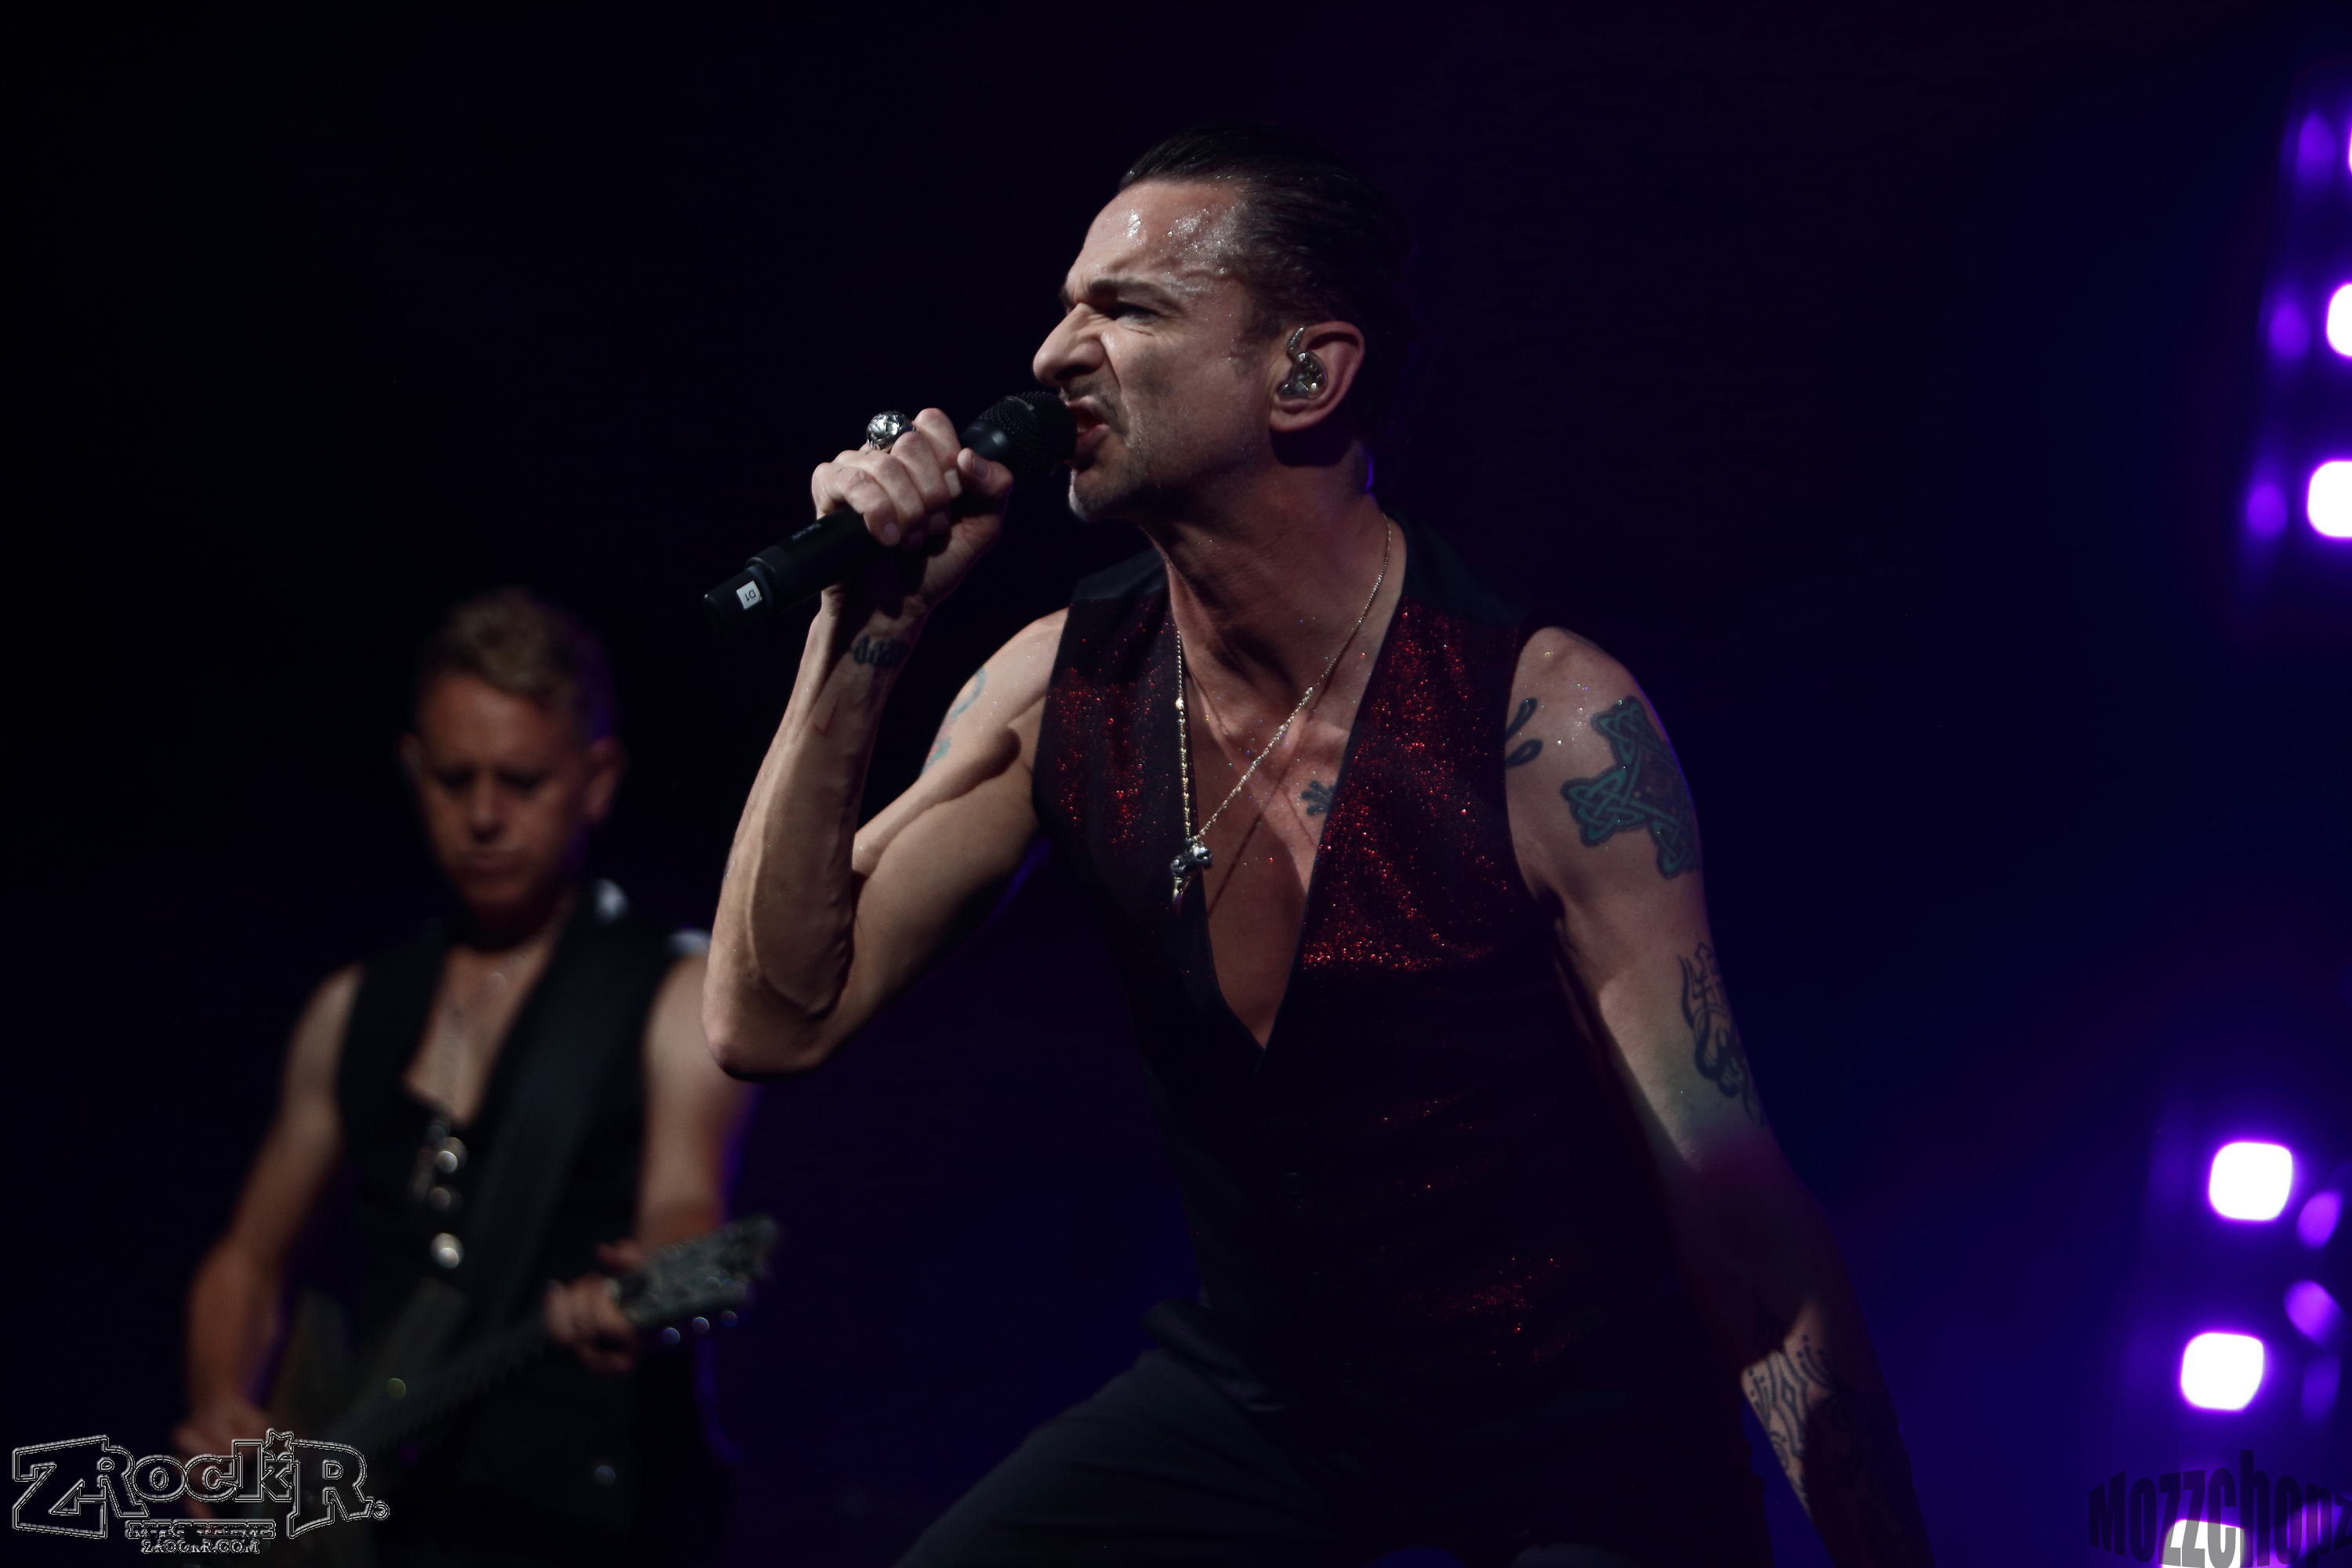 Depeche Mode Brings the Global Spirit Tour to Las Vegas